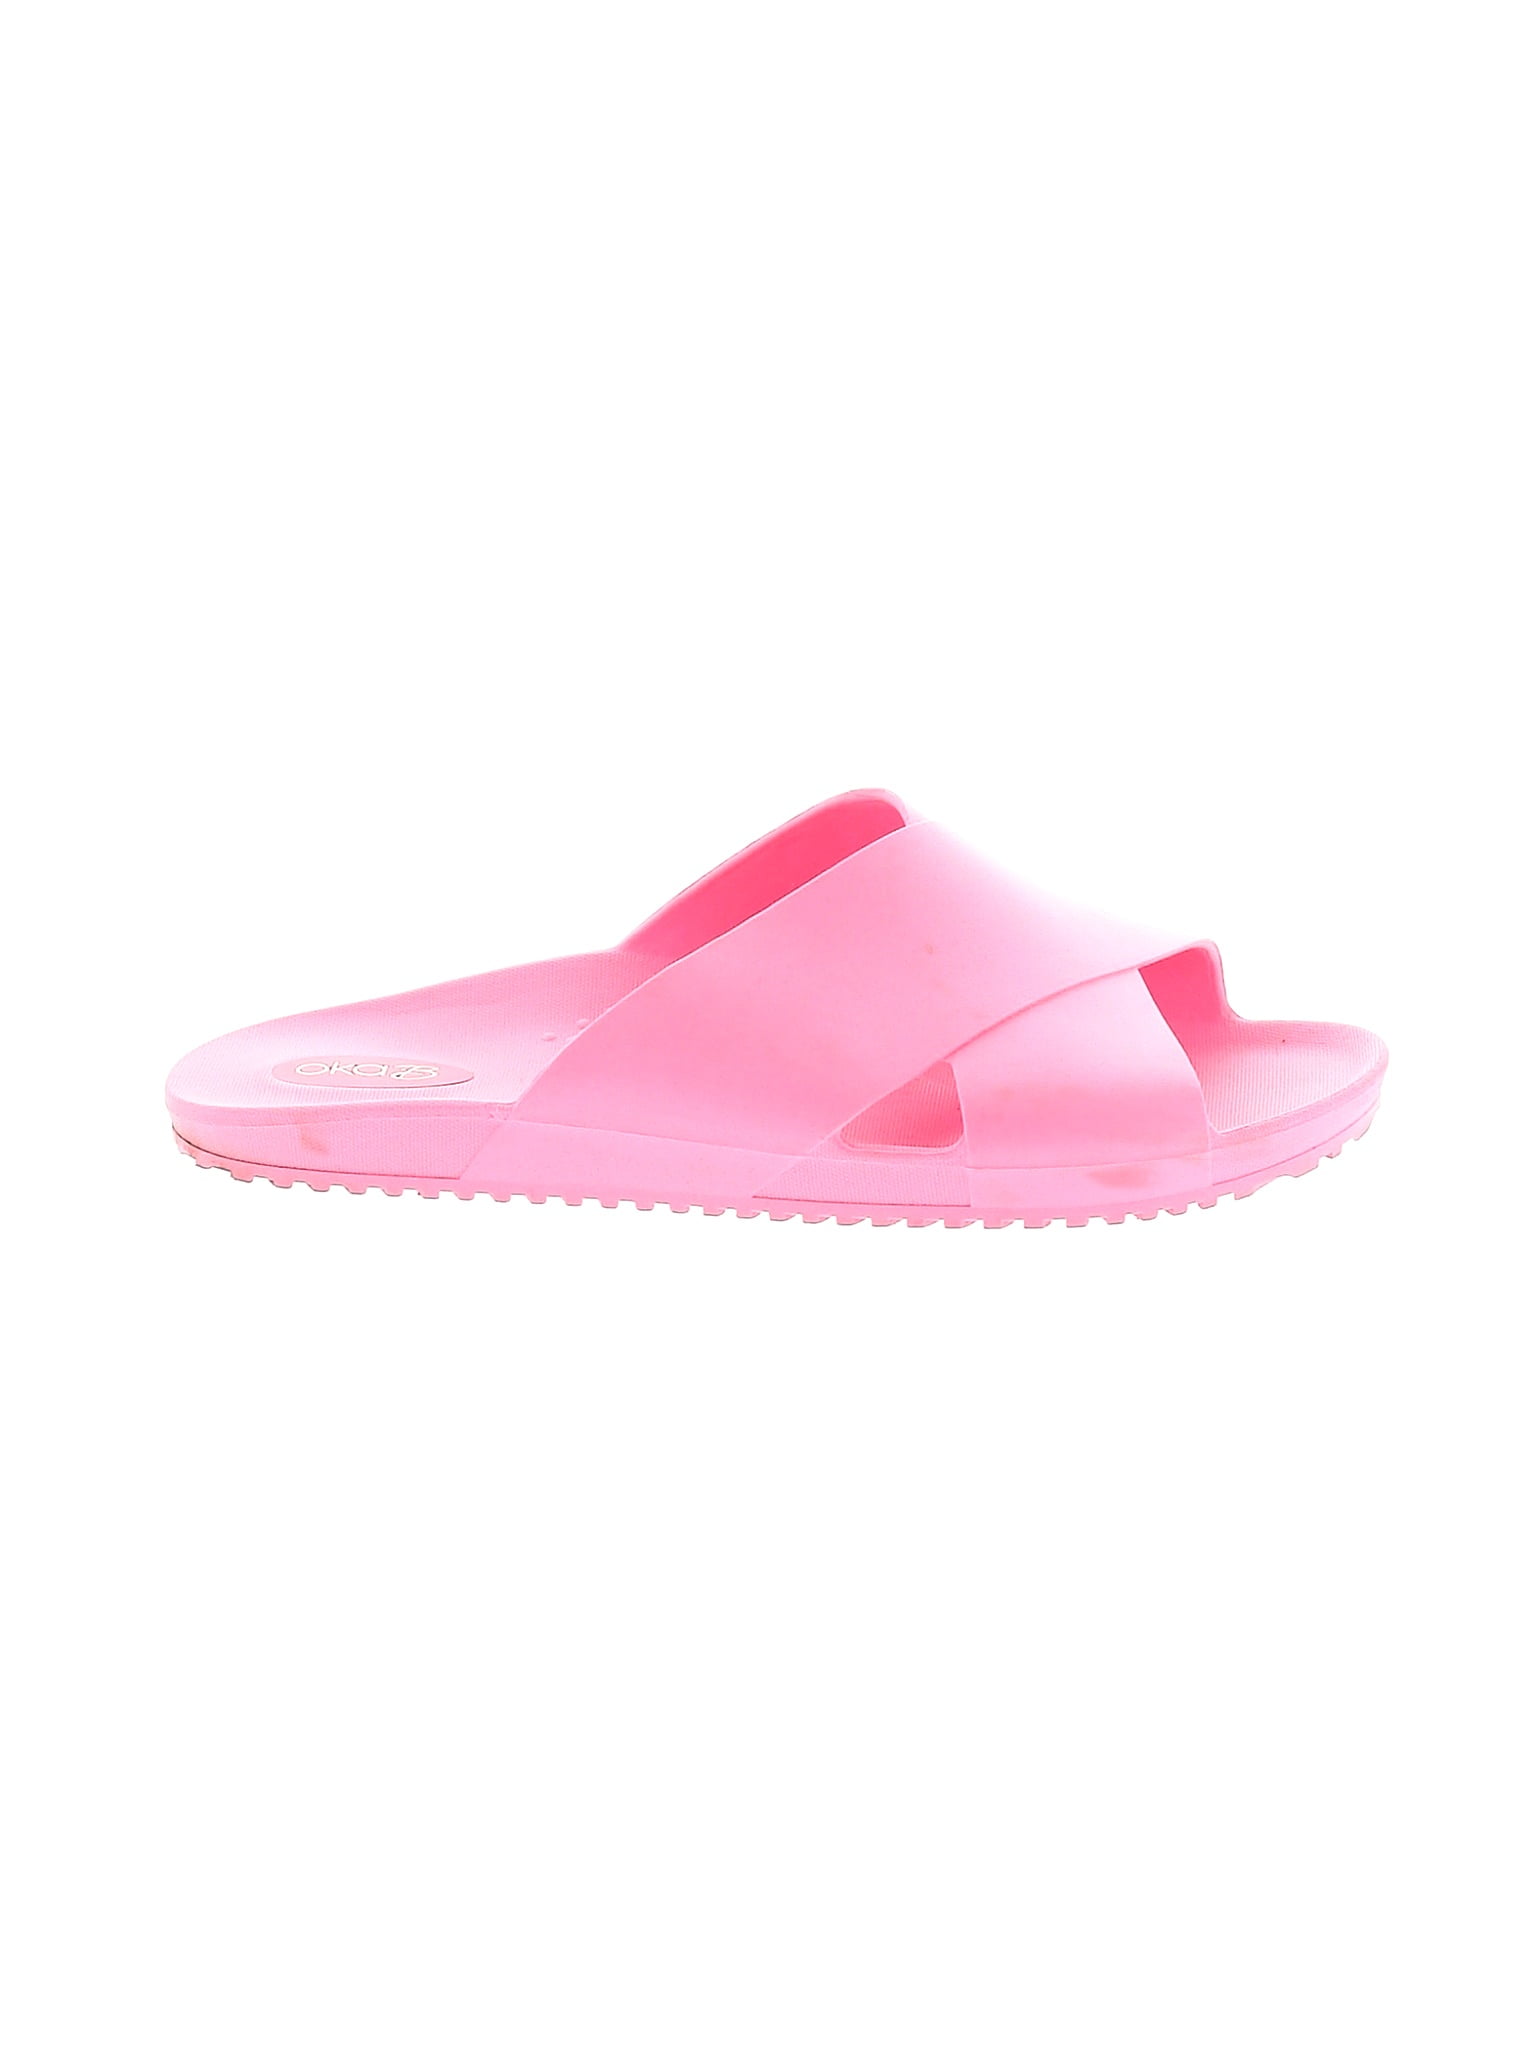 Oka B. Solid Pink Sandals Size 8 1/2 - 9 1/2 - 56% off | thredUP